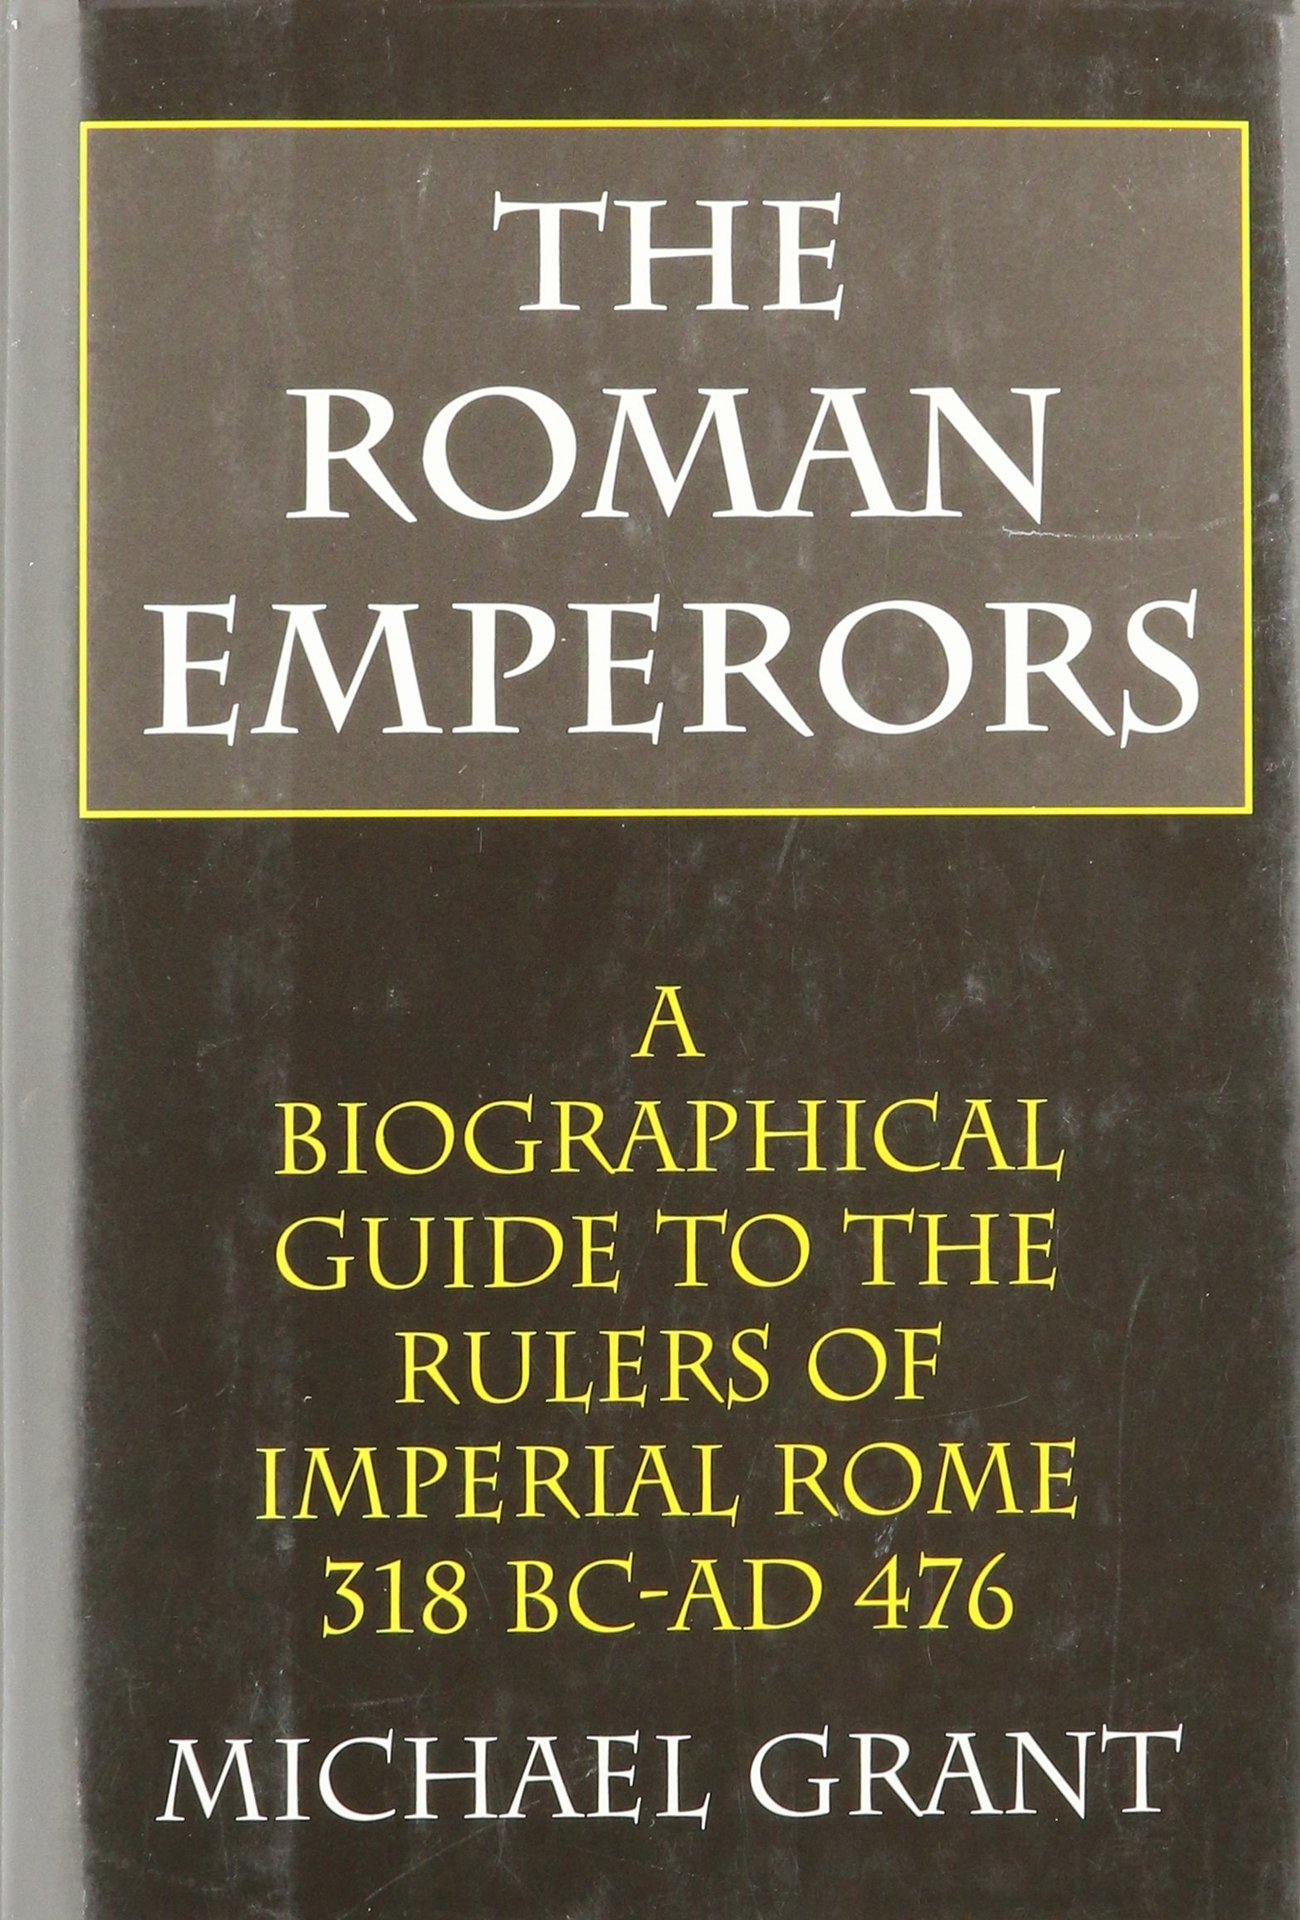 The Roman Emperors Grant.jpg